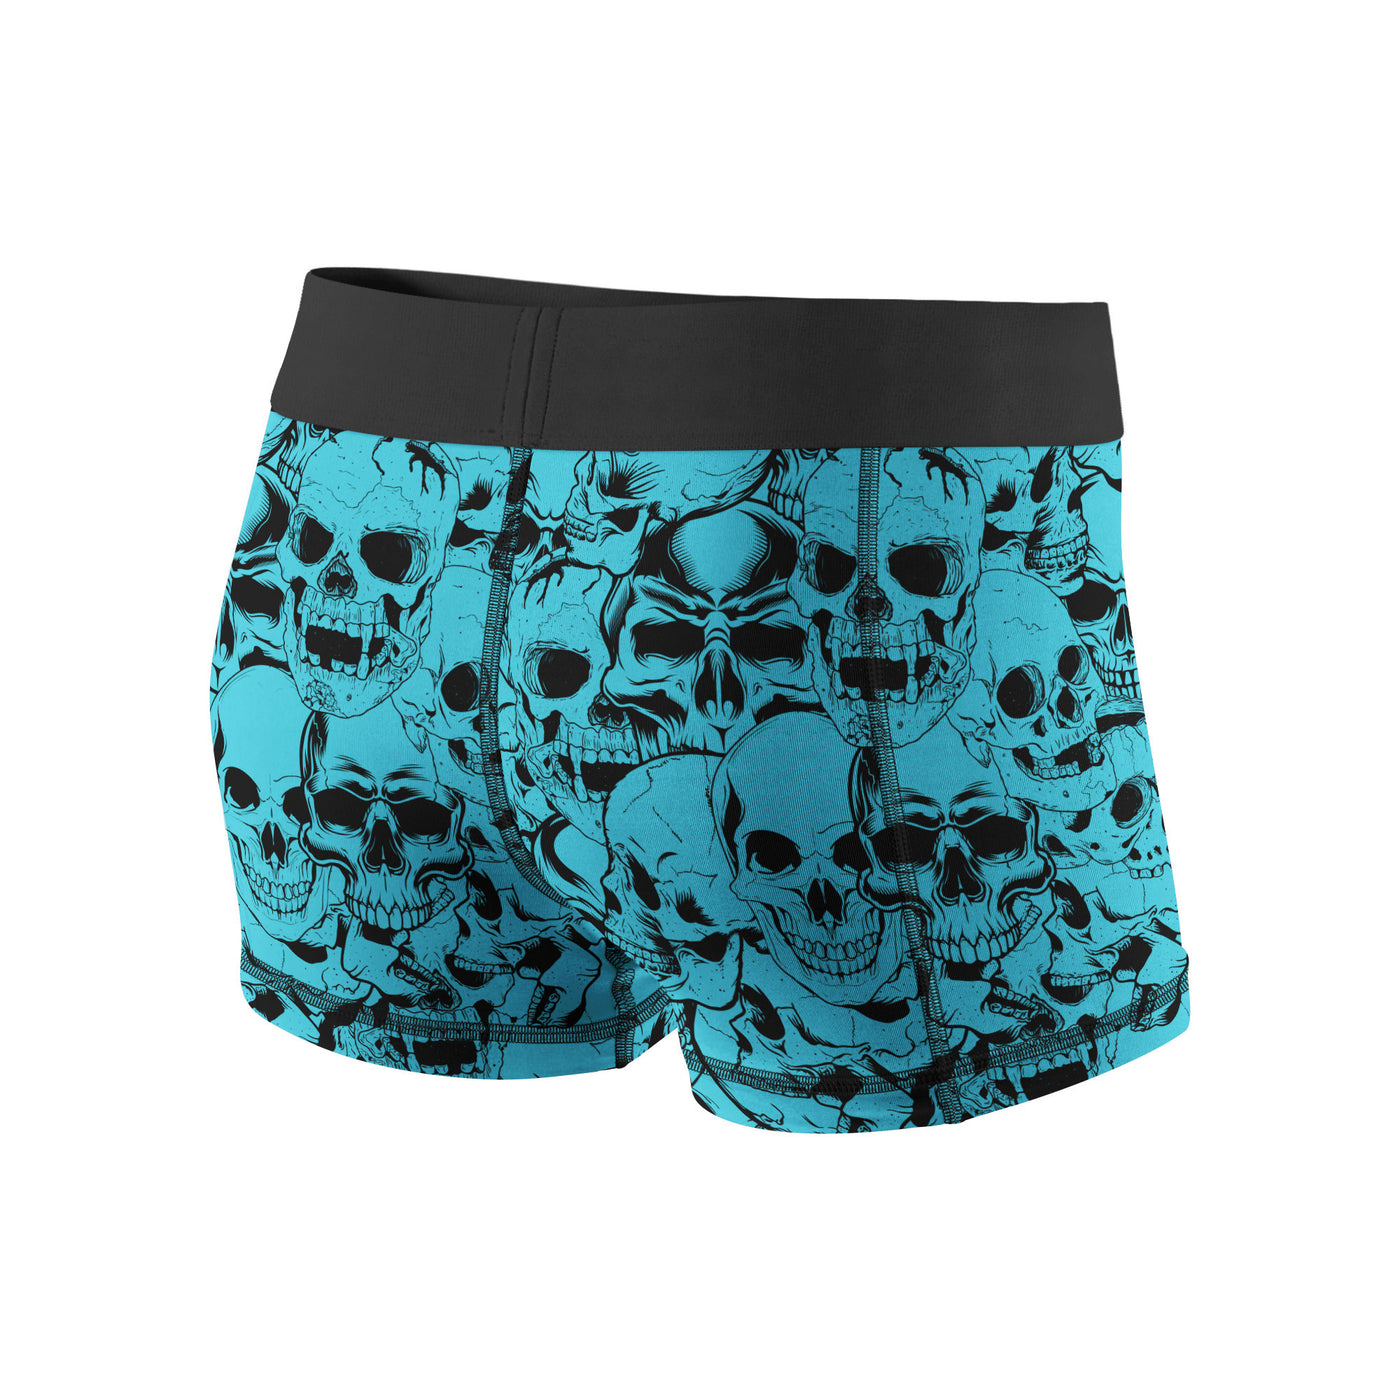 Turquoise Skulls Fitness Shorts